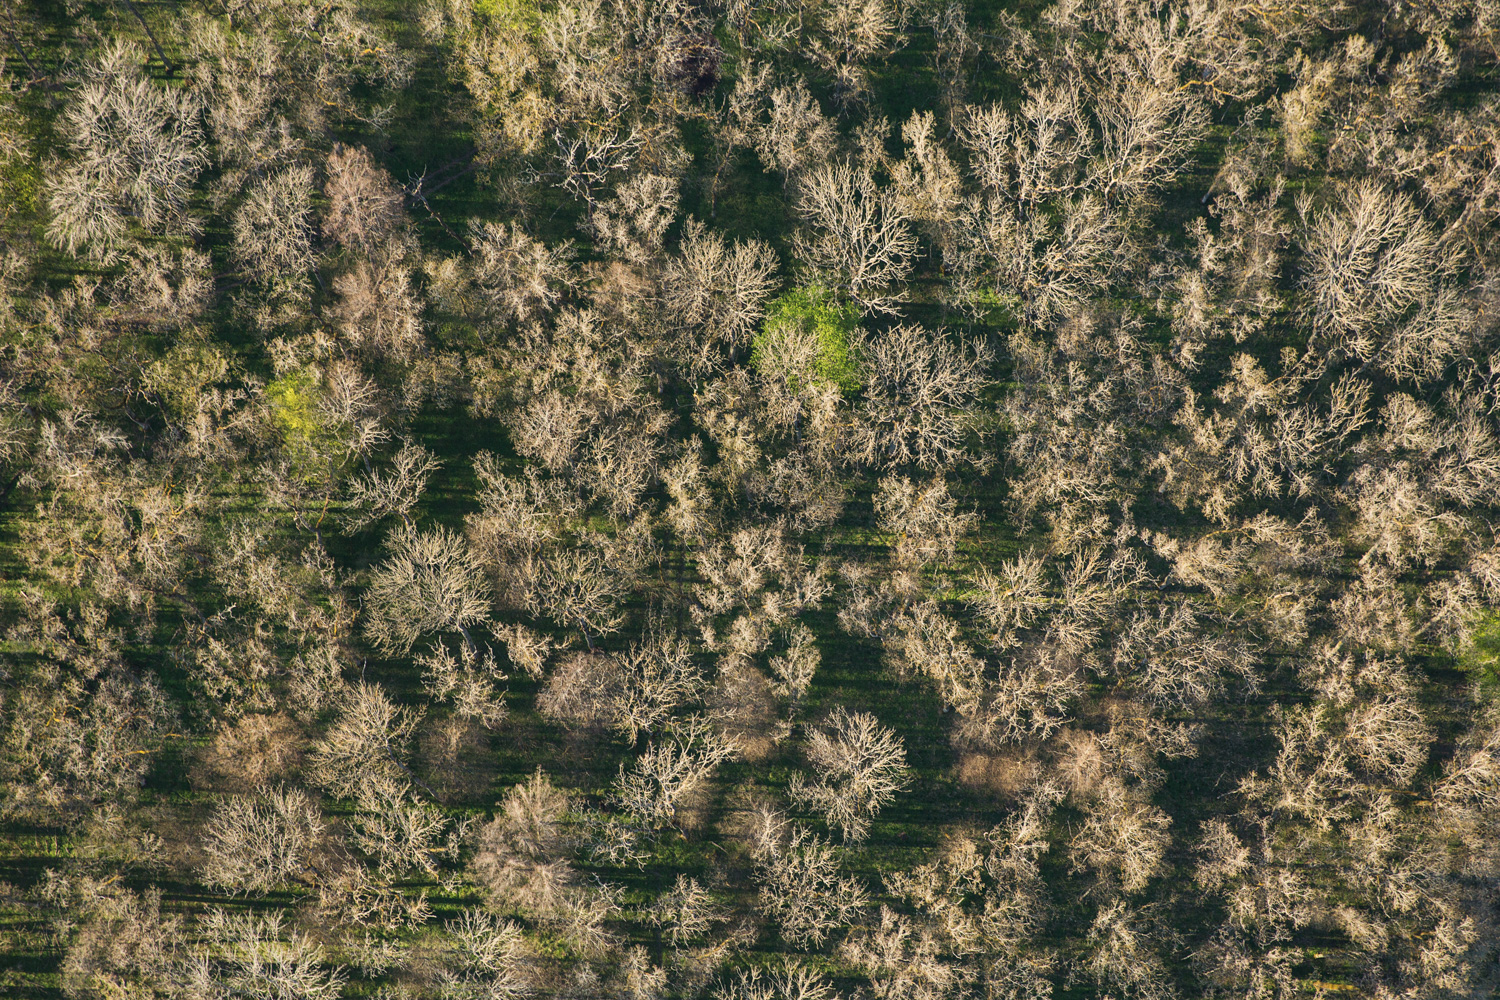  Treetops - Survey #3, 2016 //  80 cm x 120 cm  